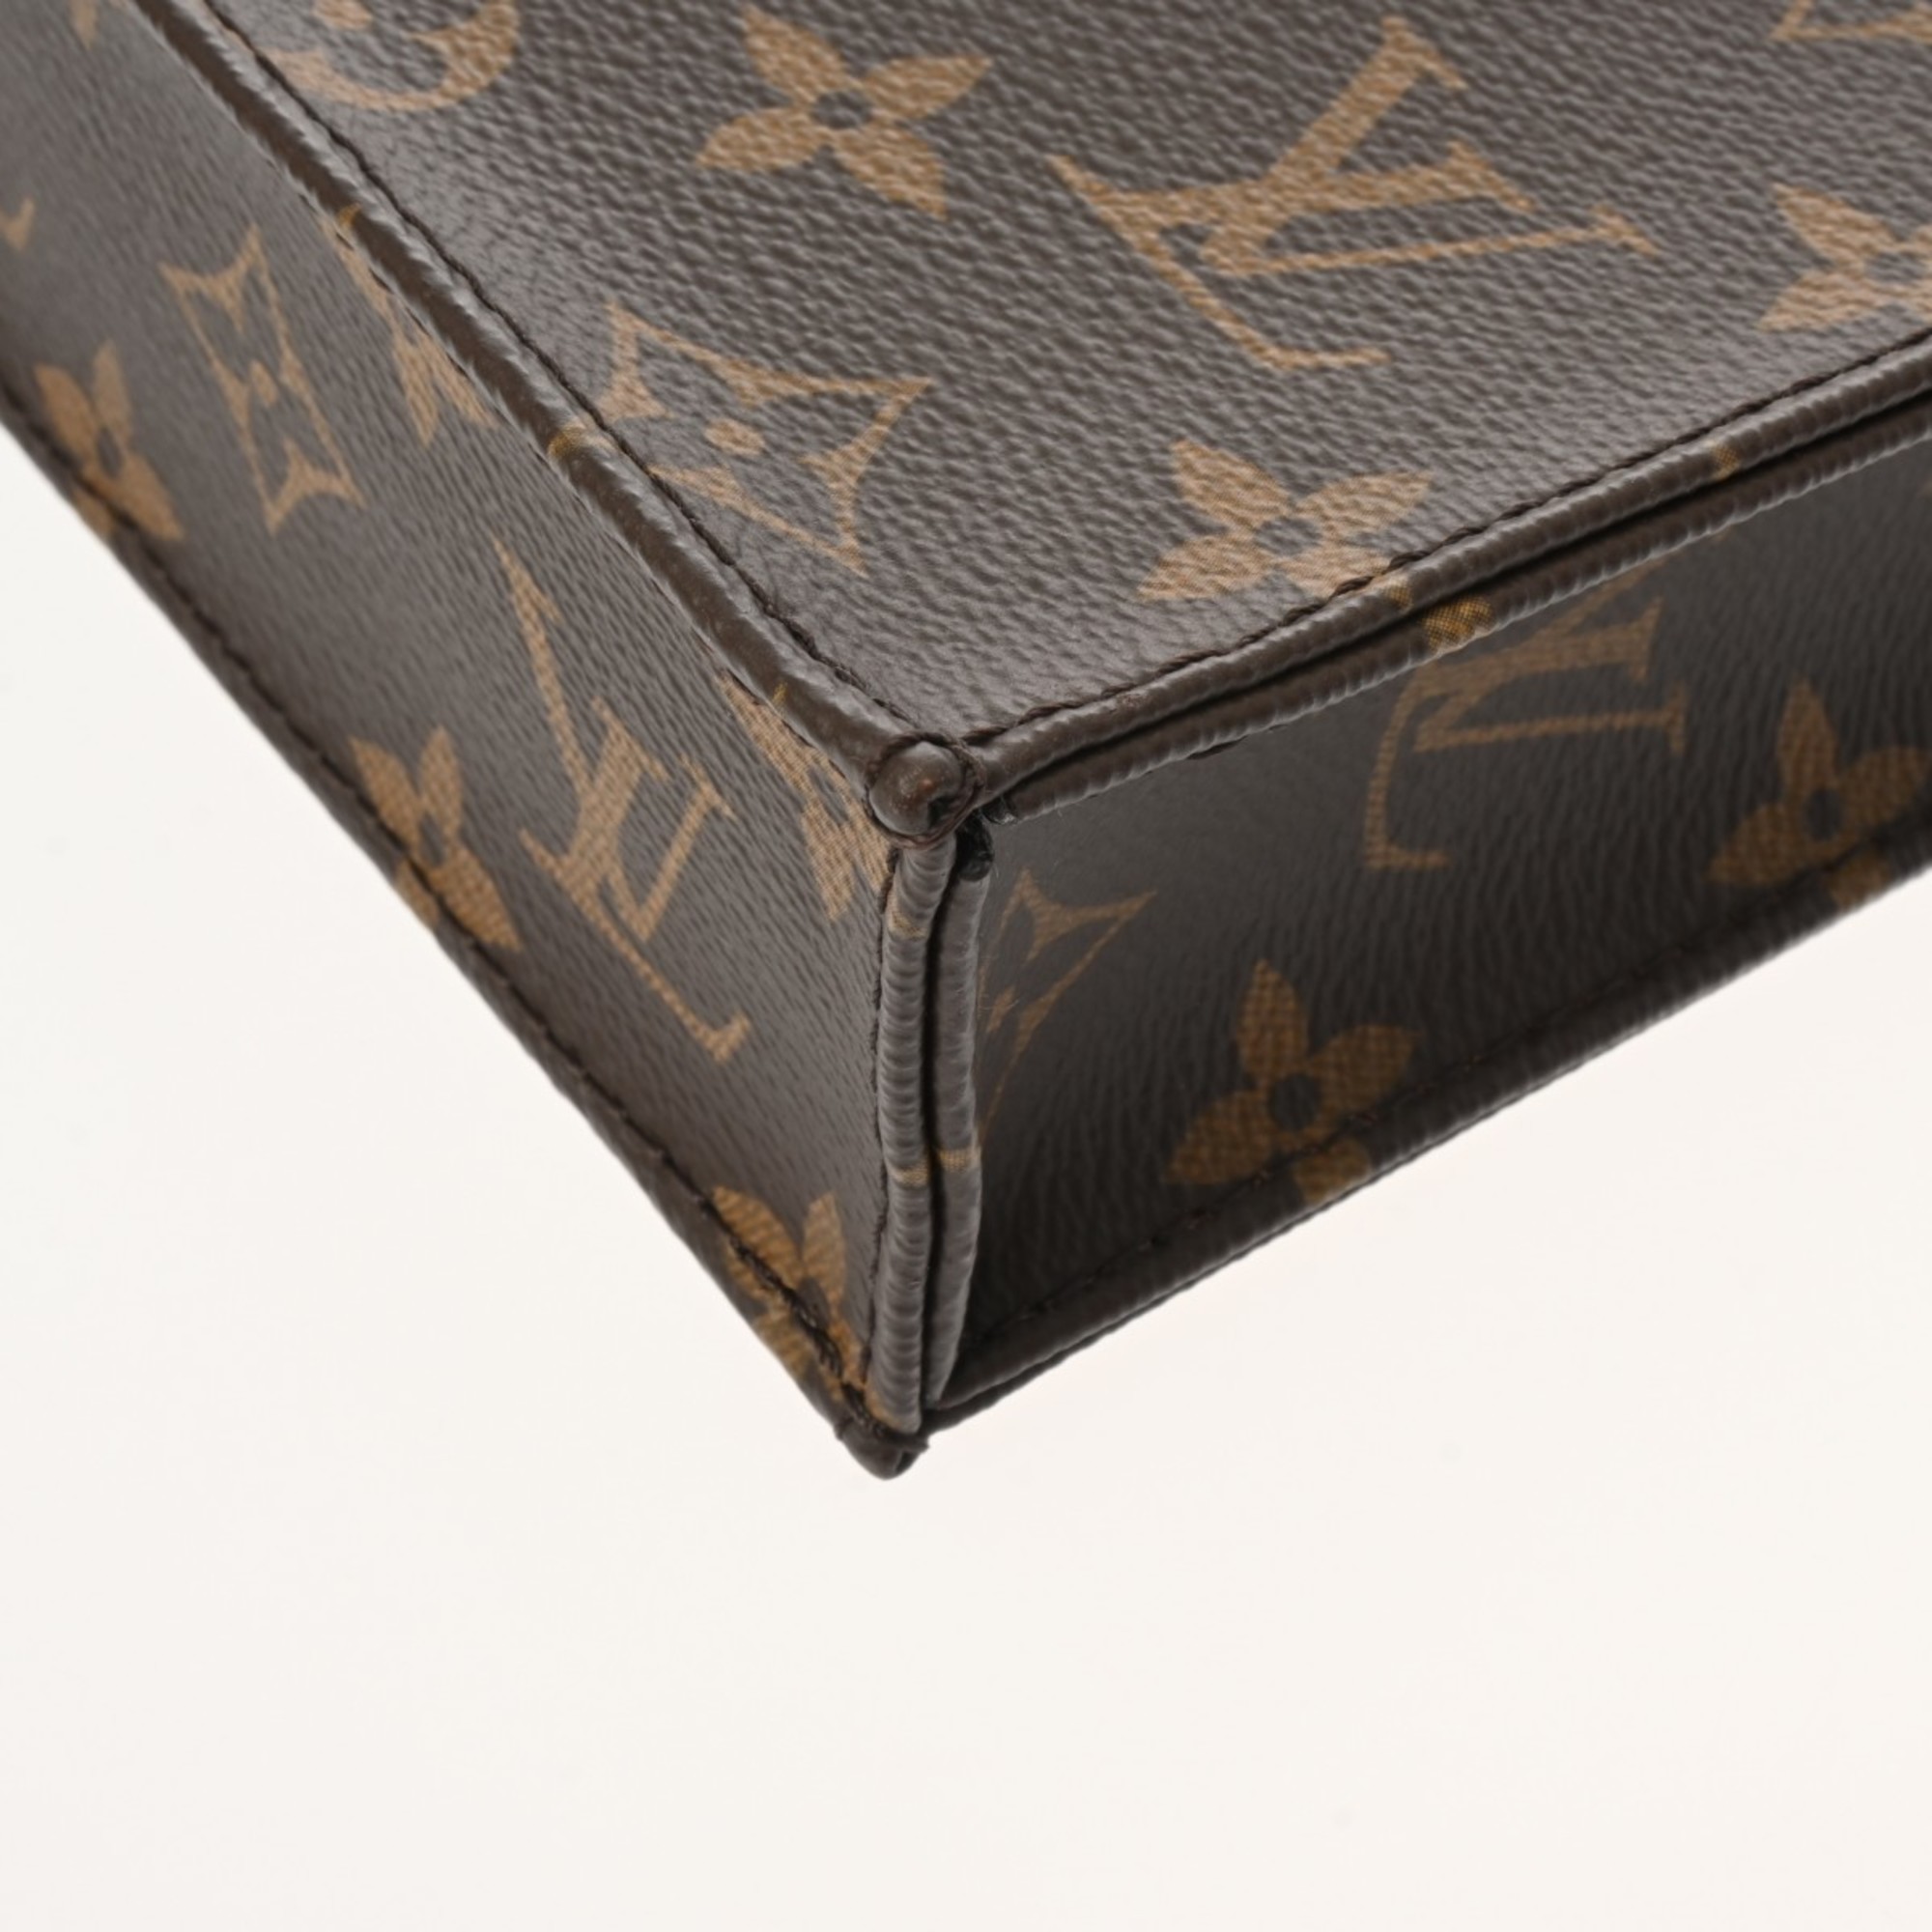 LOUIS VUITTON Louis Vuitton Monogram Petite Sac Plat Brown M81295 Women's Canvas Handbag